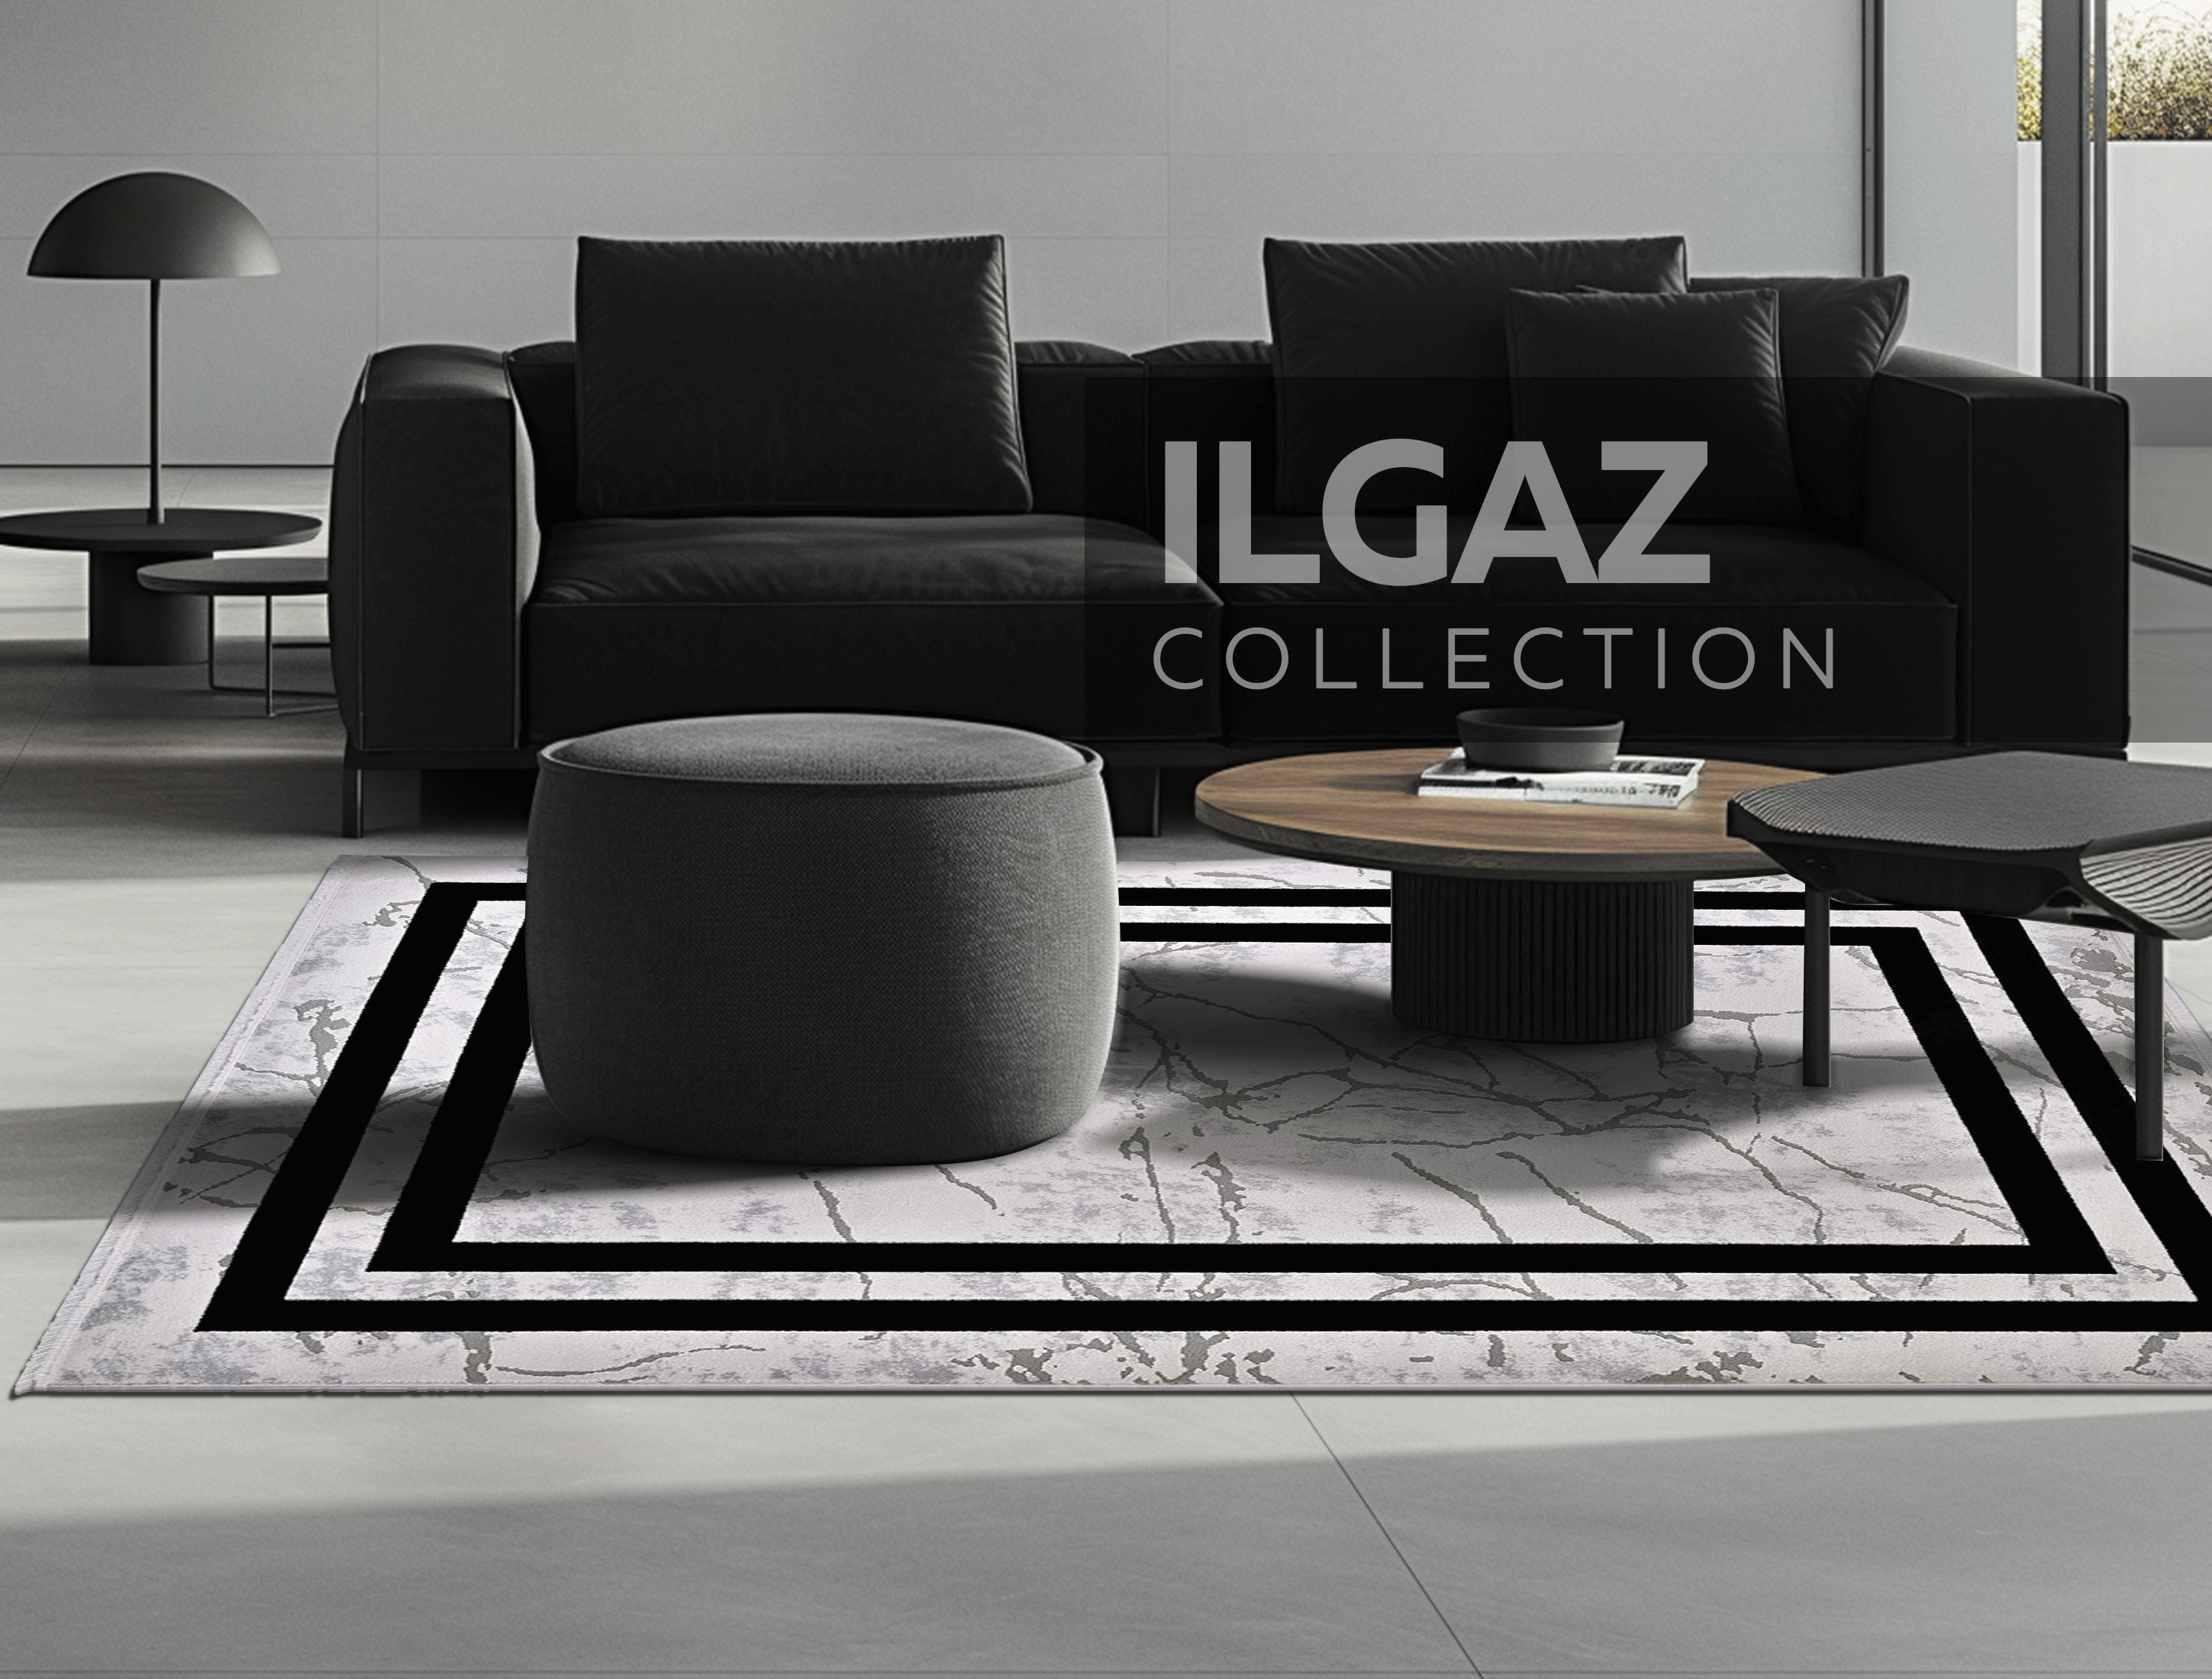 Ilgaz Collection